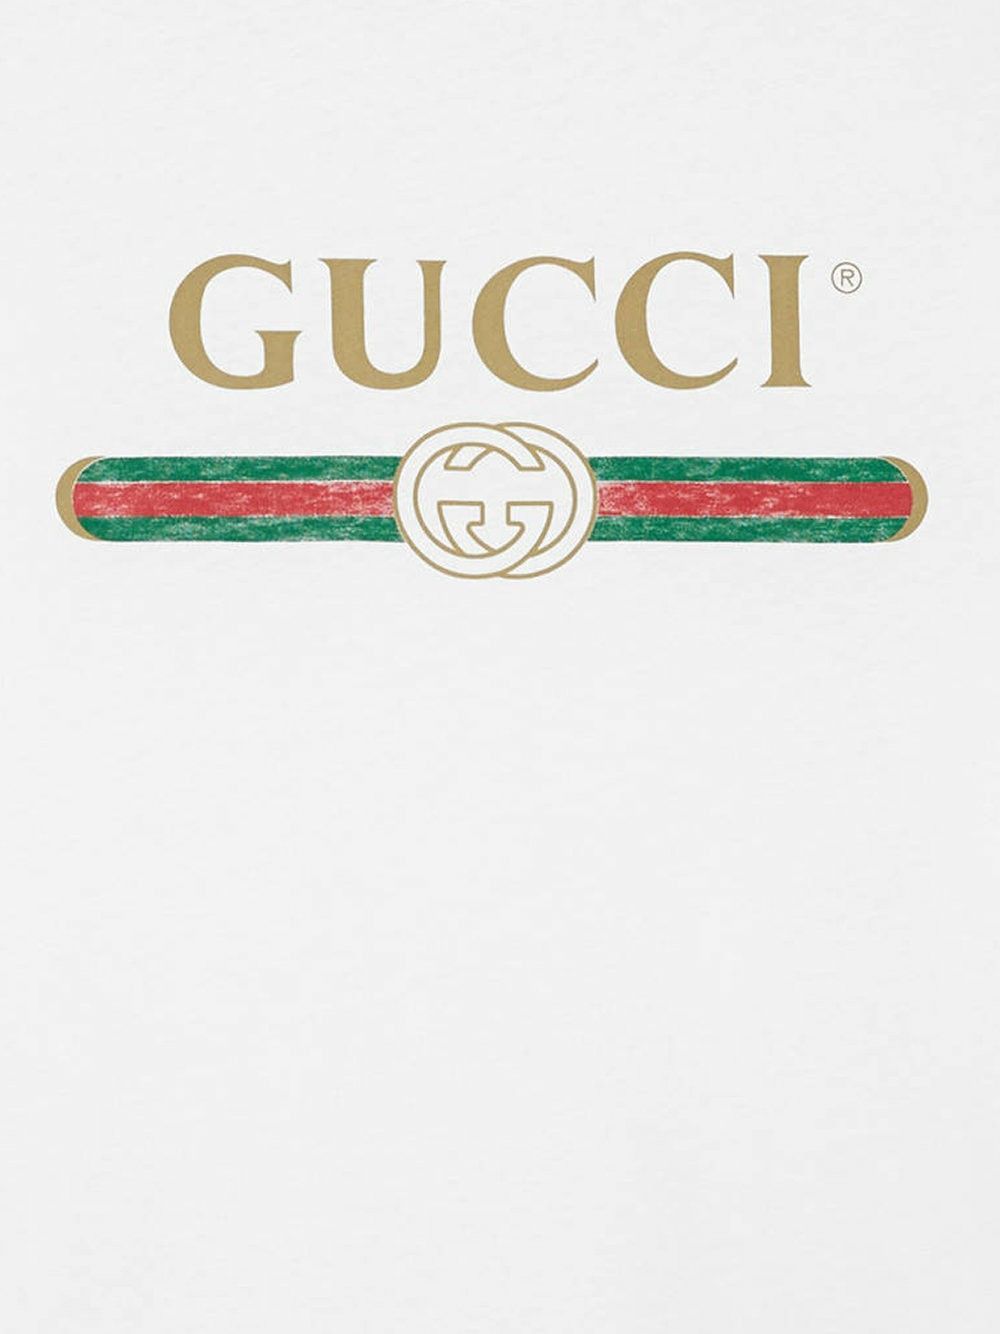 Gucci logo. Gucci wallpaper iphone, Hypebeast iphone wallpaper, Fashion wallpaper